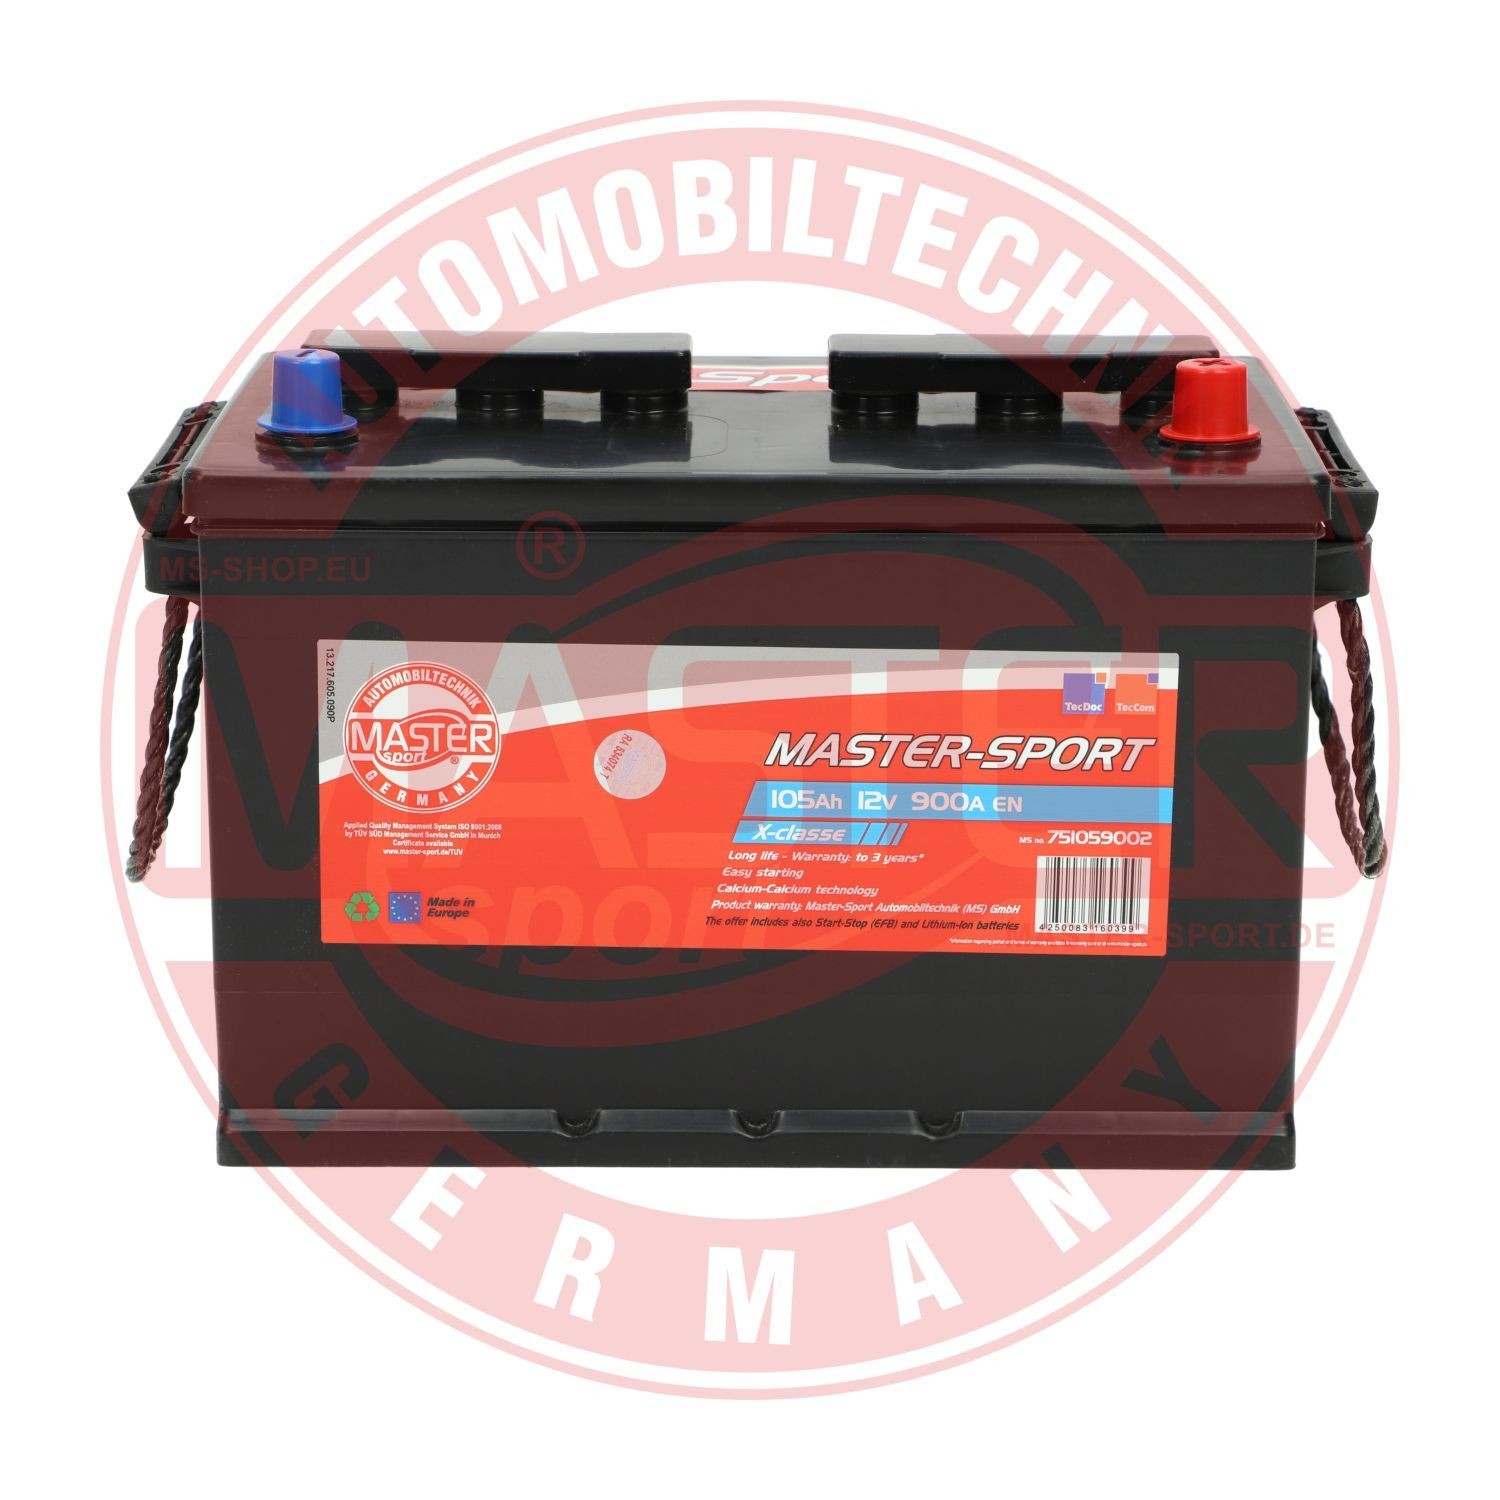 MASTER-SPORT 12V 105Ah 900A B01 Starter battery 751059002 buy